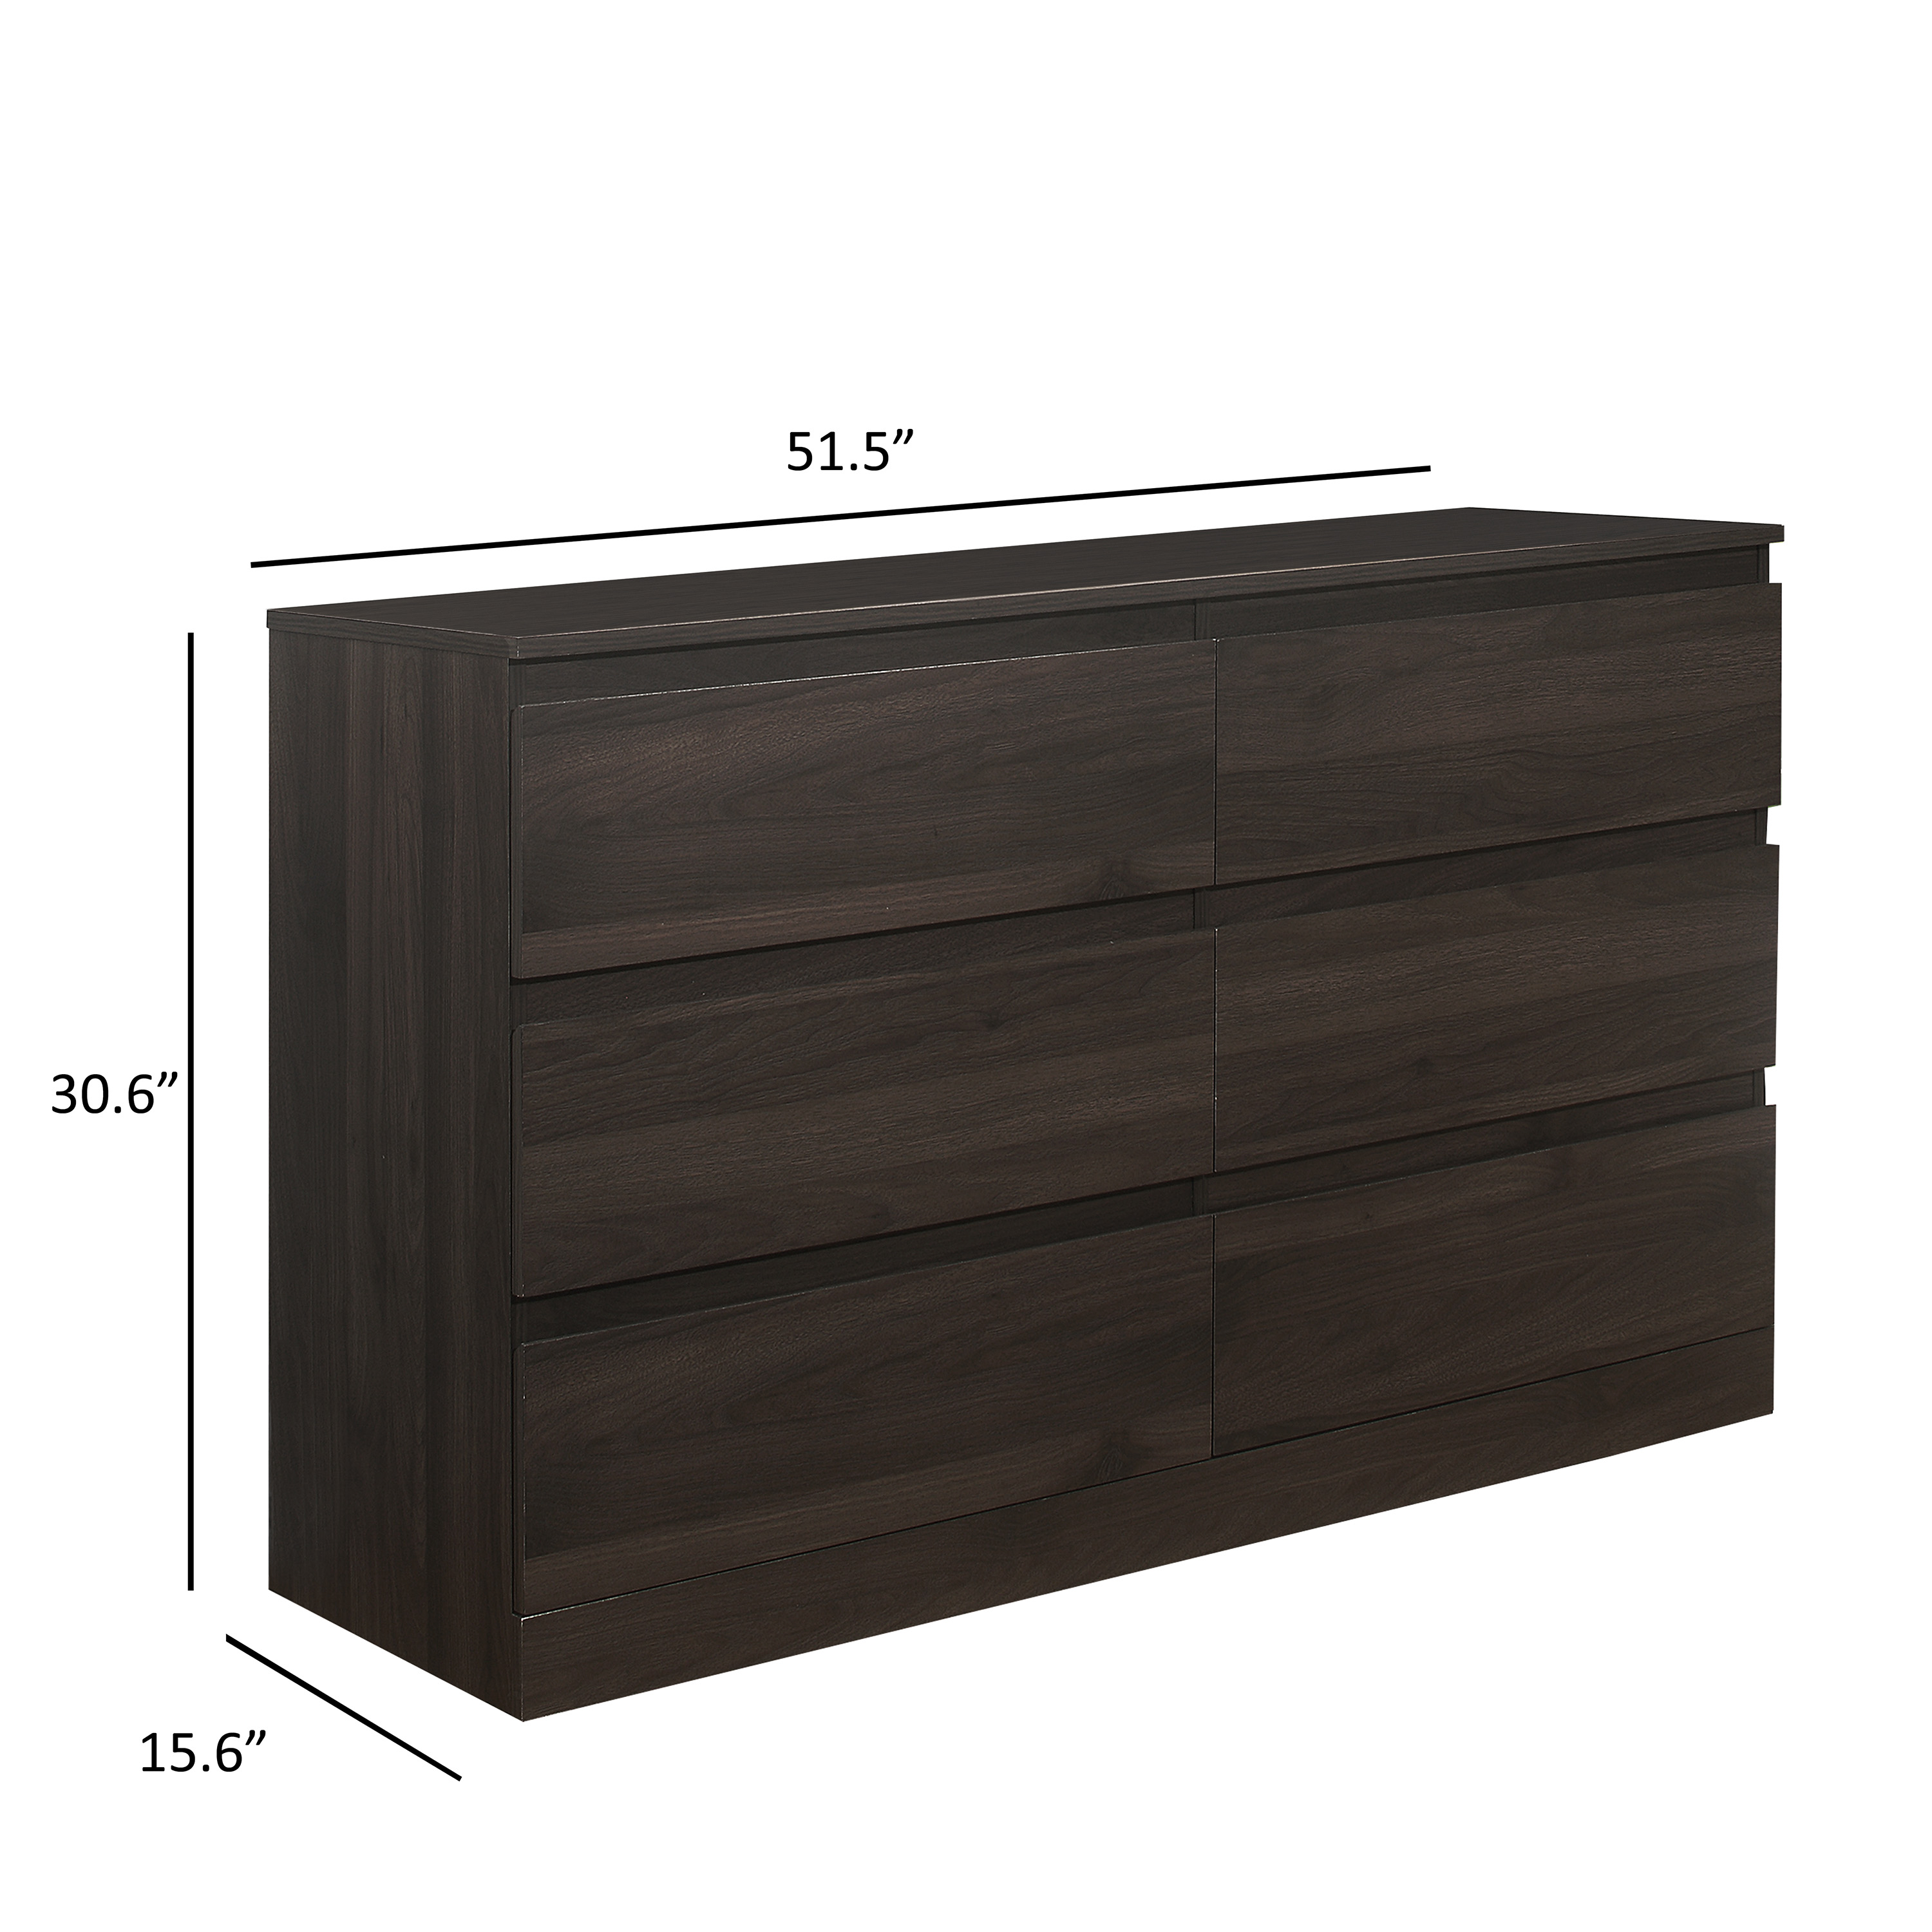 Brindle 6-Drawer Horizontal Dresser, Espresso Finish, by Hillsdale - image 3 of 13